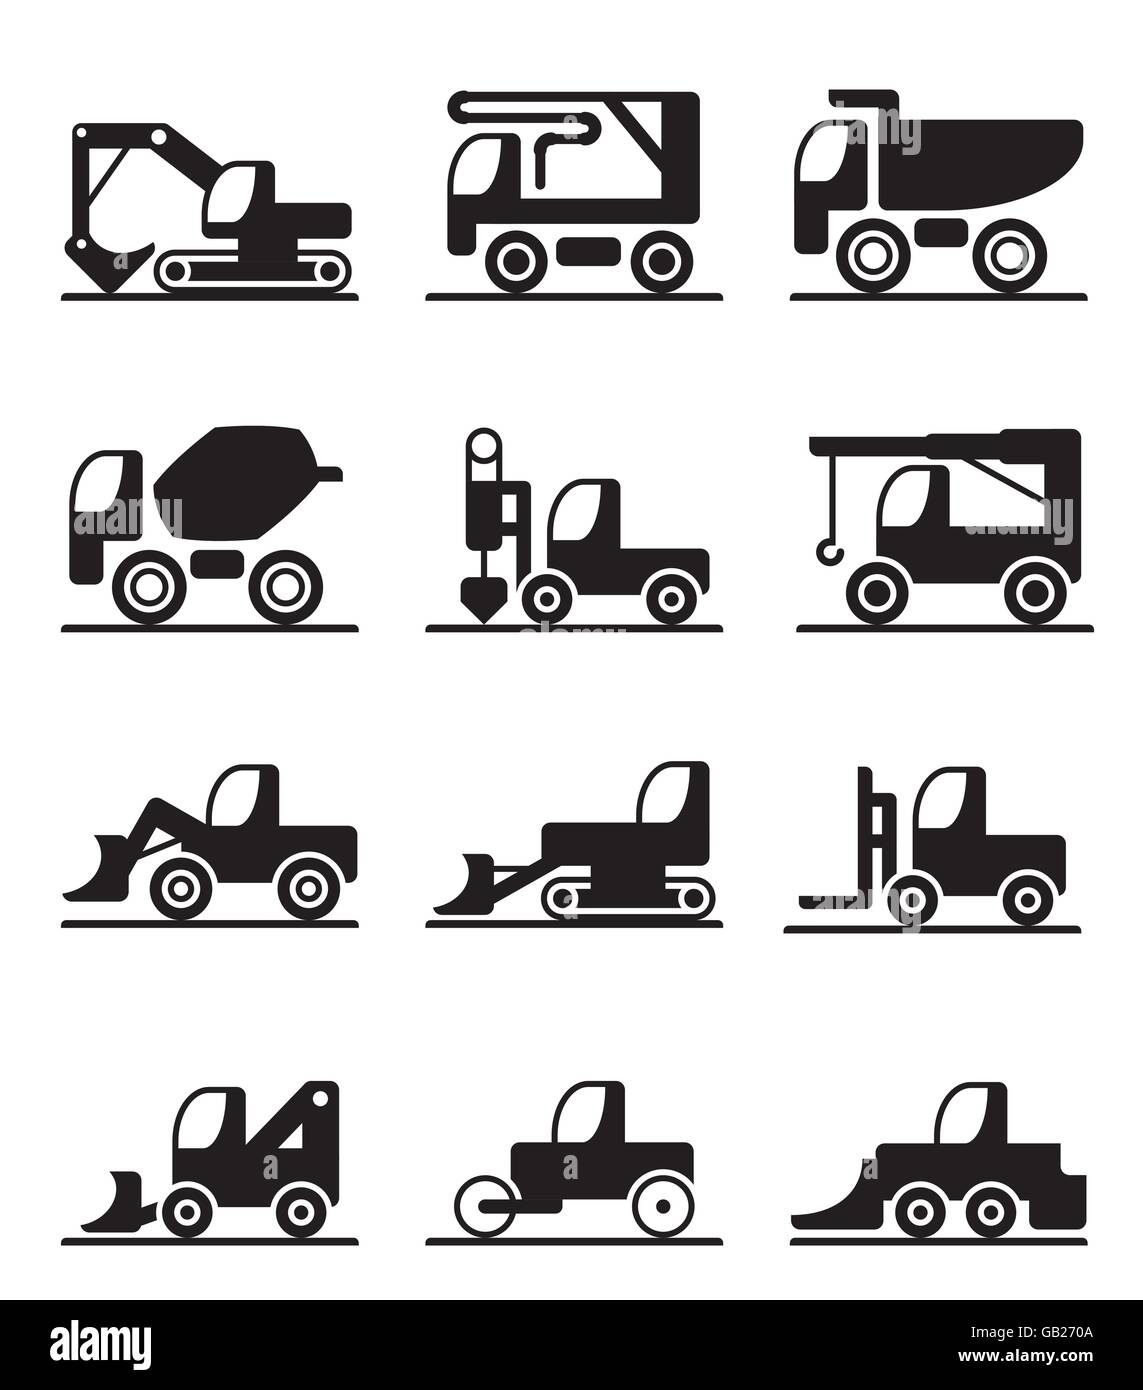 Construction  trucks and vehicles - vector illustration Stock Vector